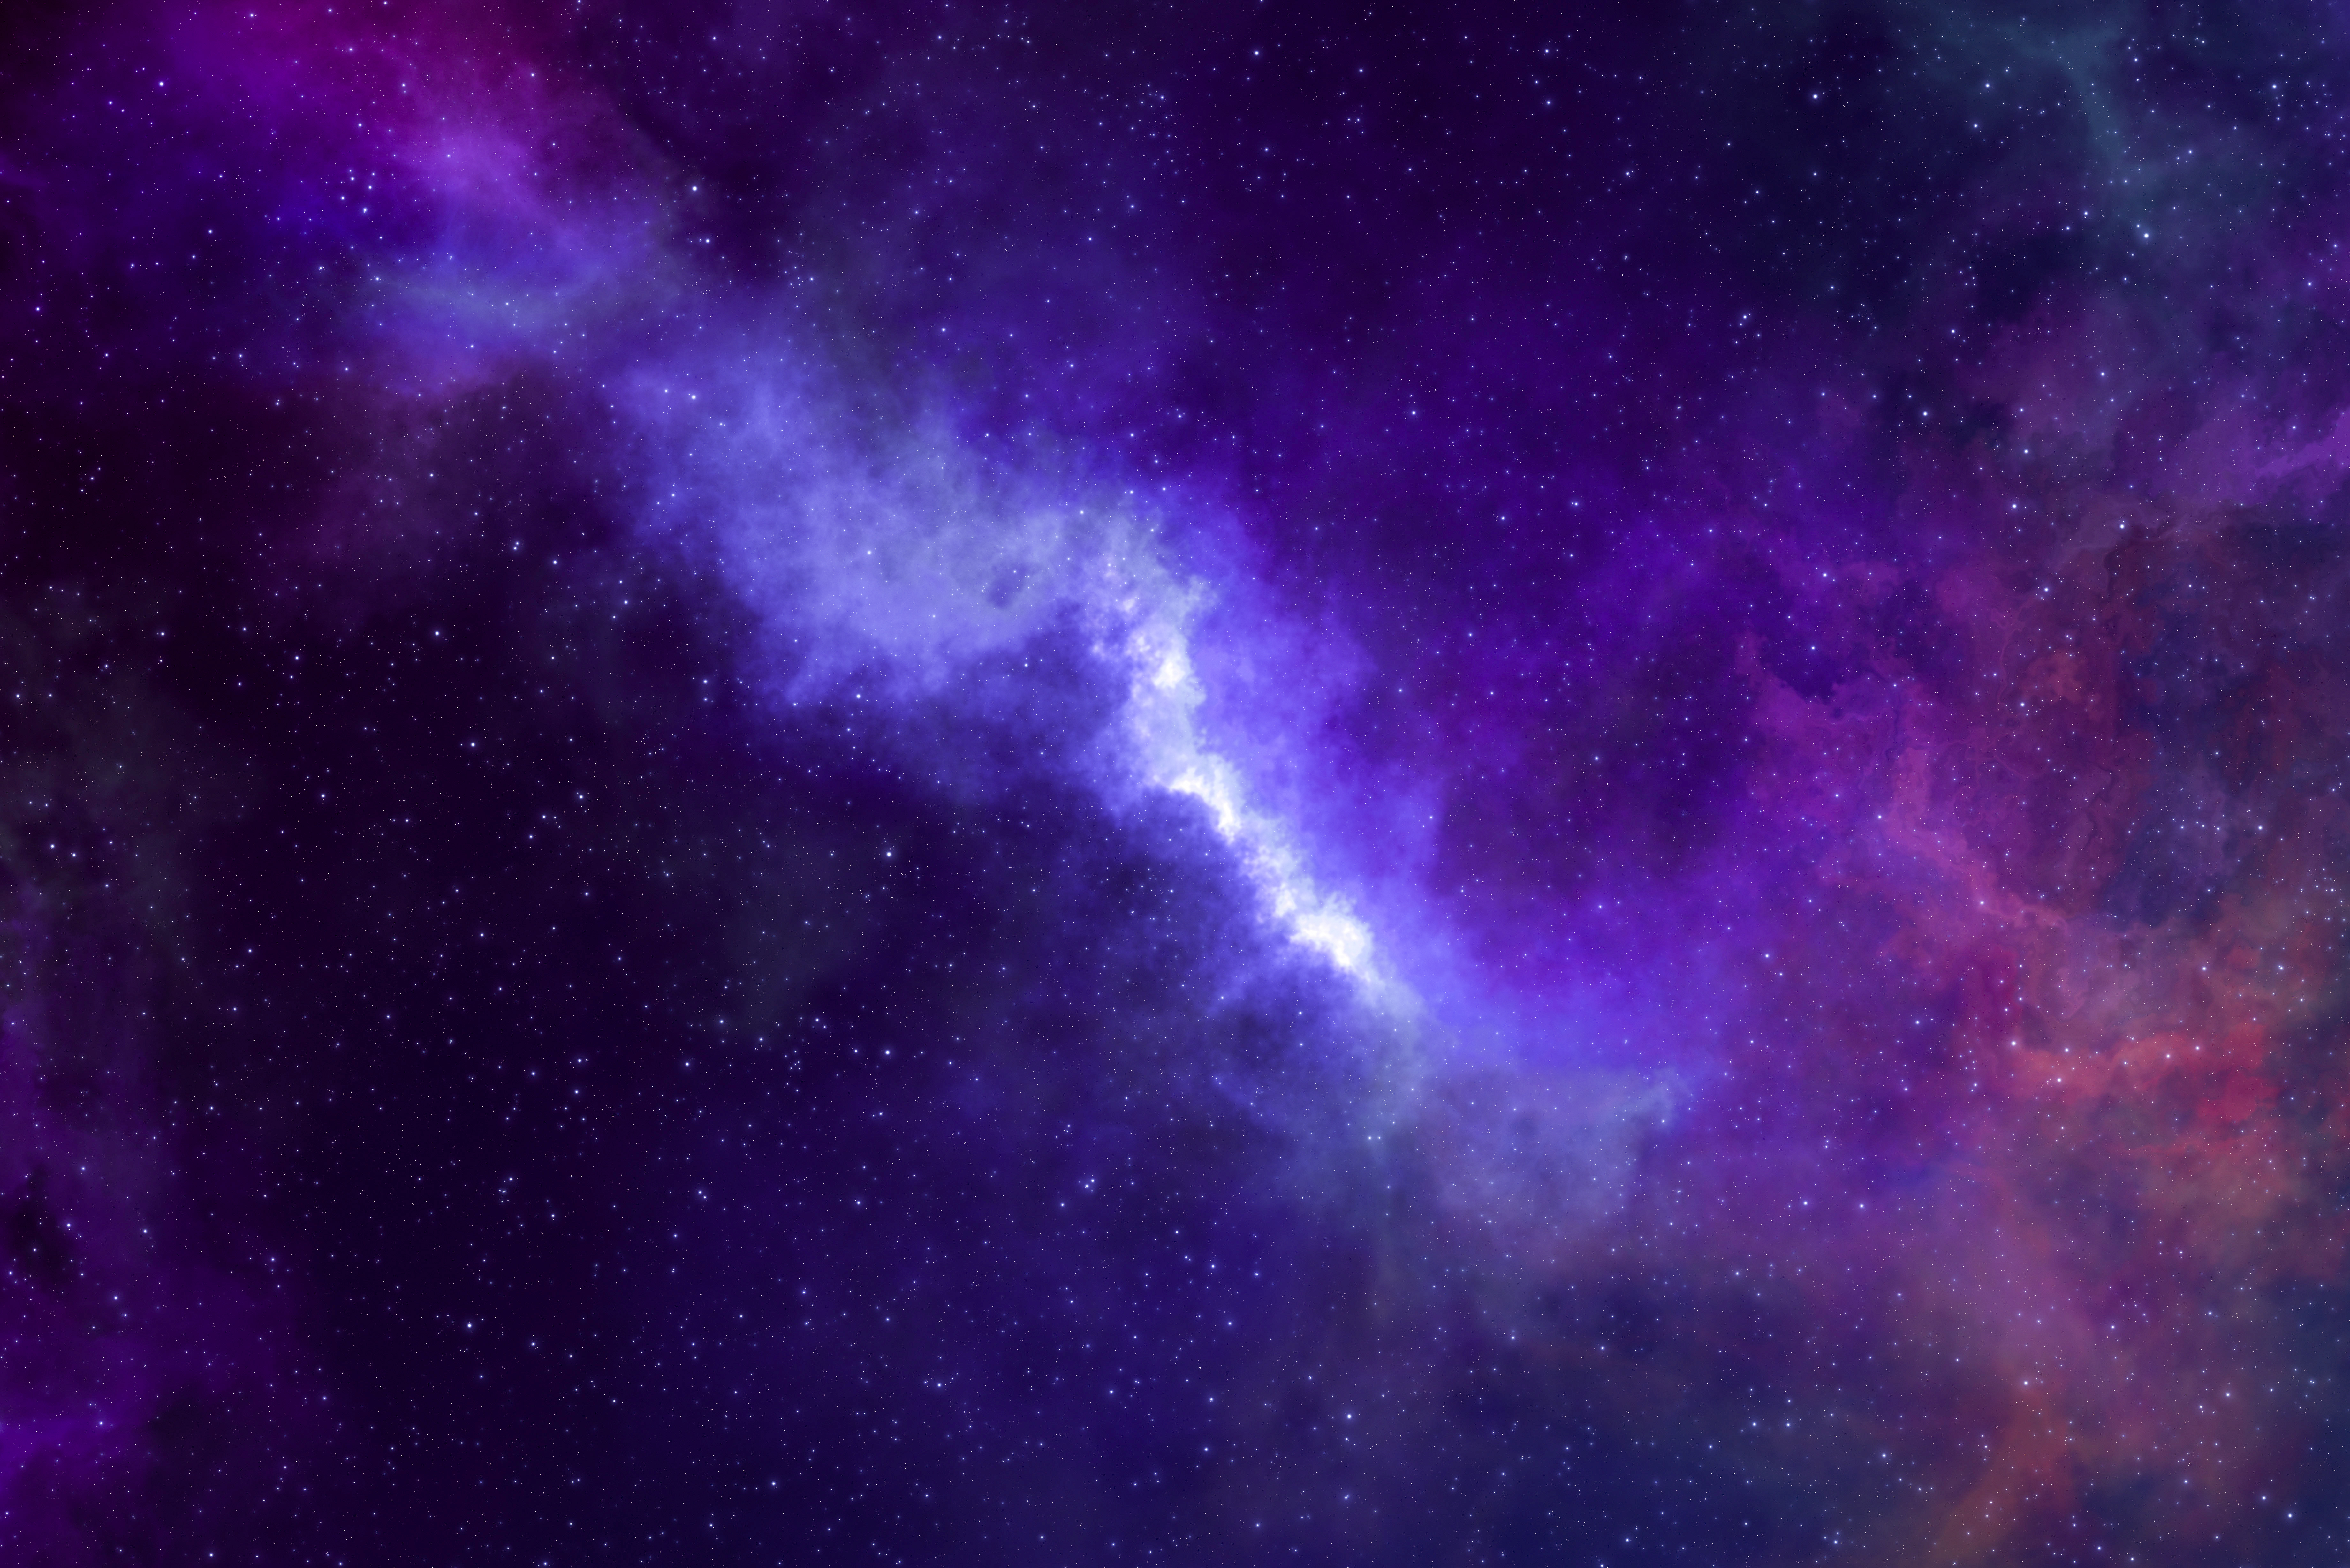 General 7360x4912 space galaxy blue purple pink neon colorful bright stars digital art